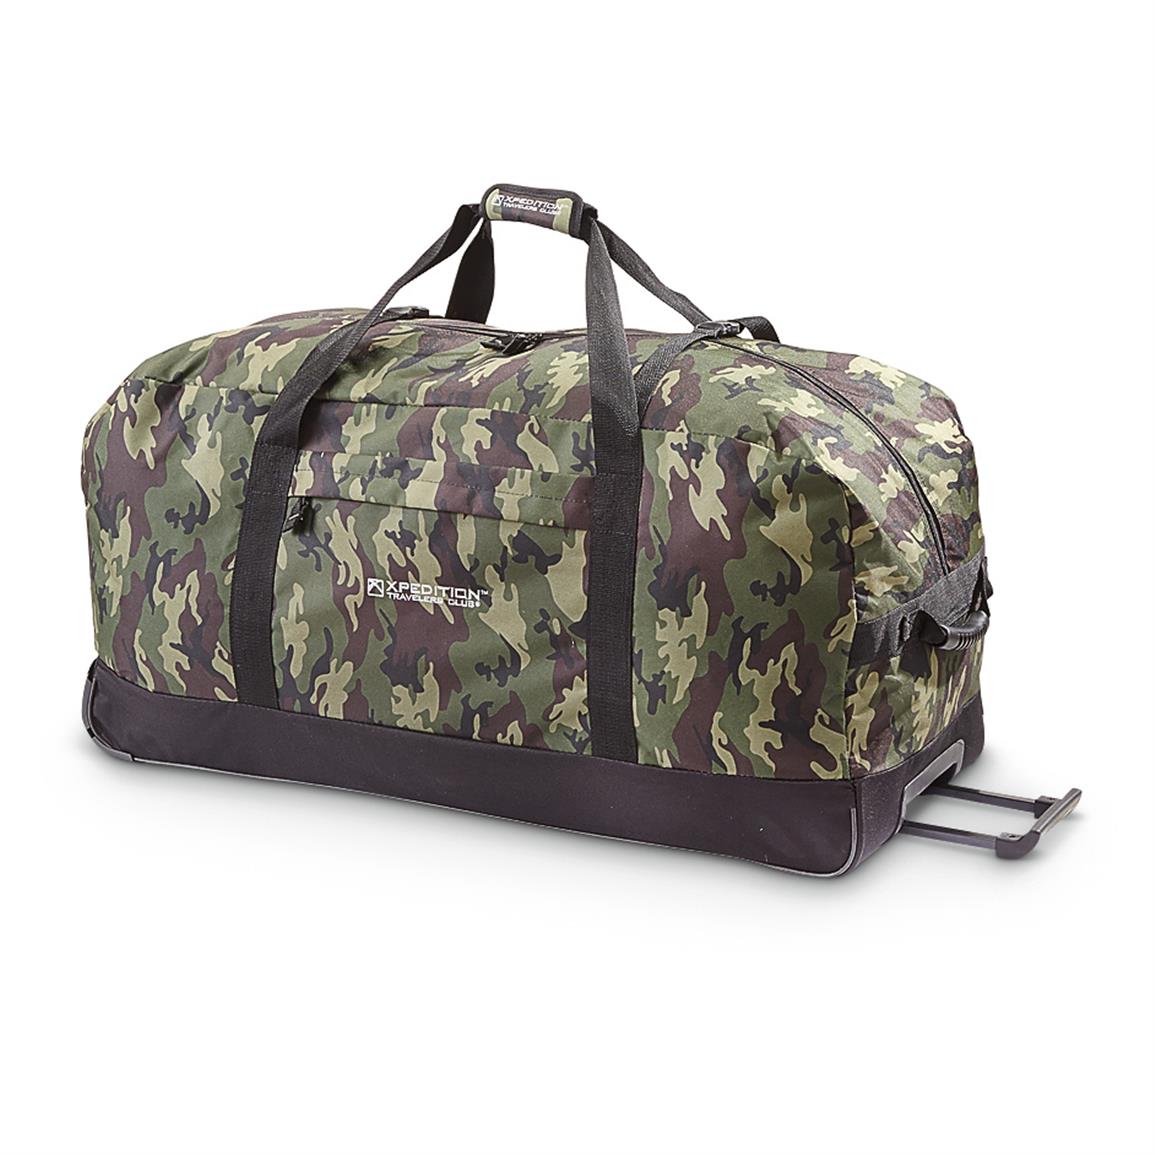 Luggage Large Duffel Bag With Wheels | semashow.com